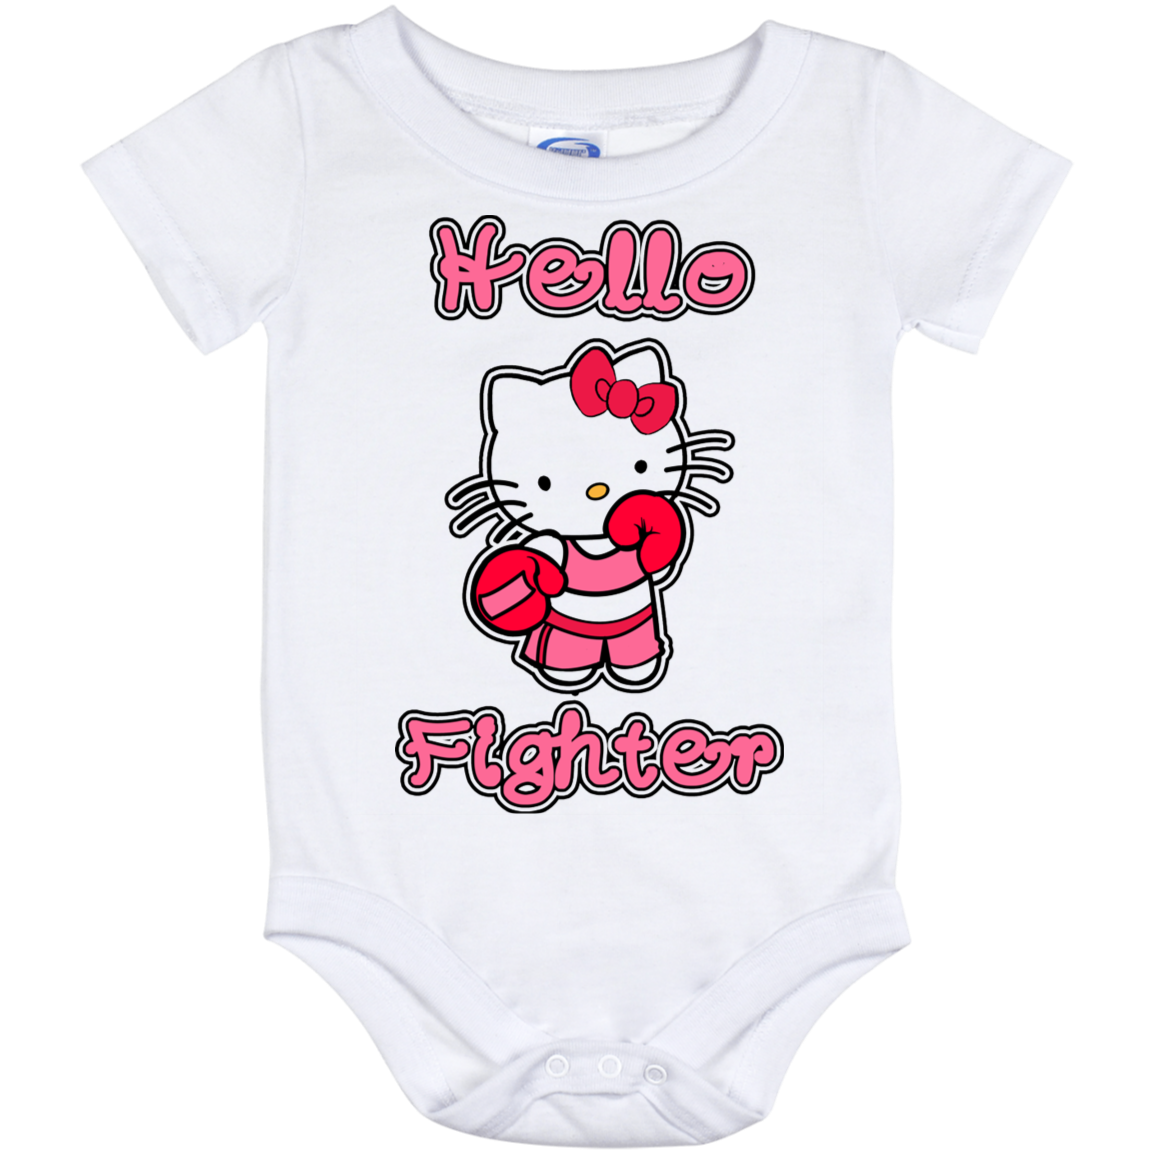 Artichoke Fight Gear Custom Design #11. Hello Fighter. Baby Onesie 12 Month